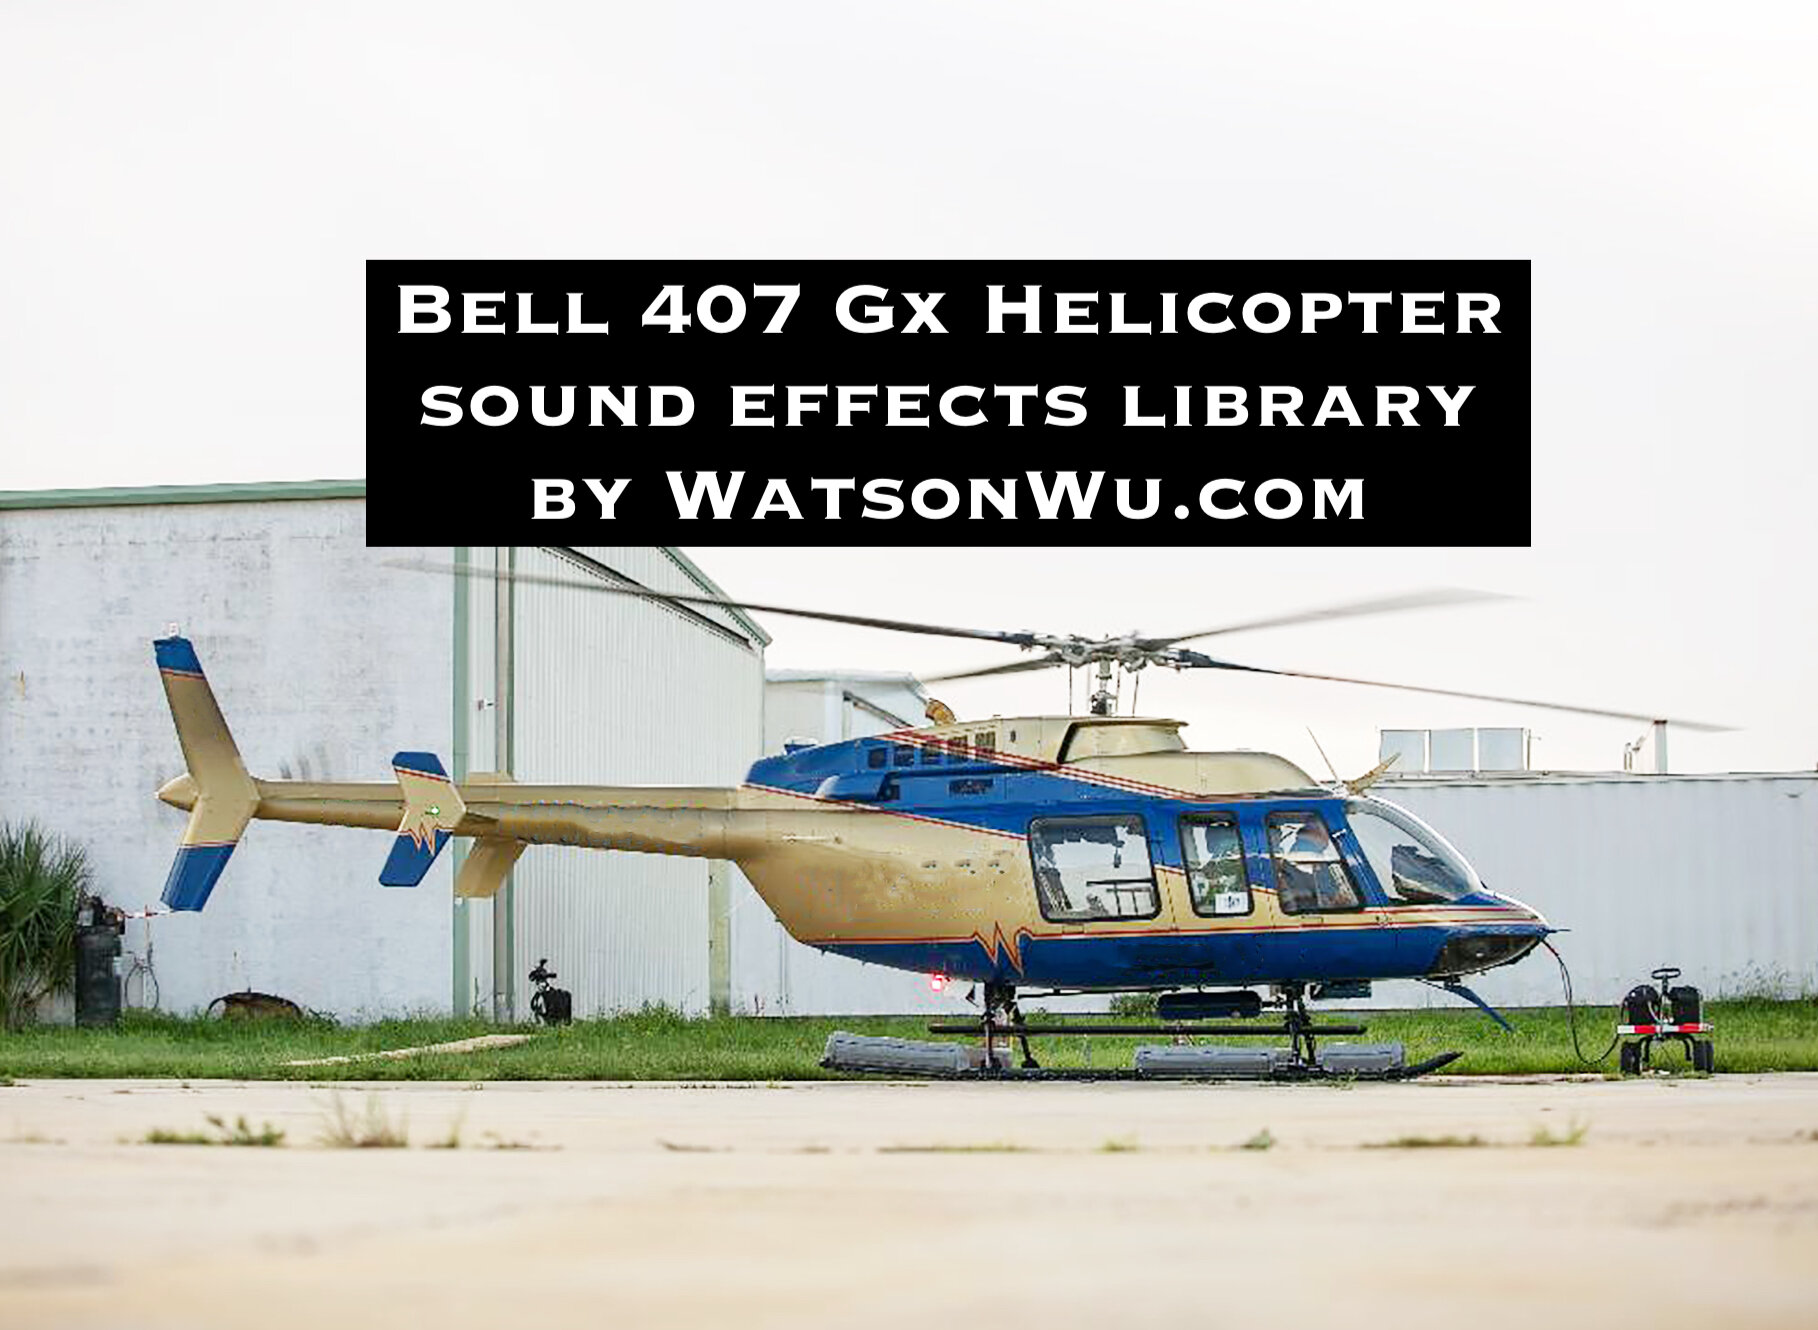 _Helicopter_Bell407GX_2016_WatsonWu.com.jpg